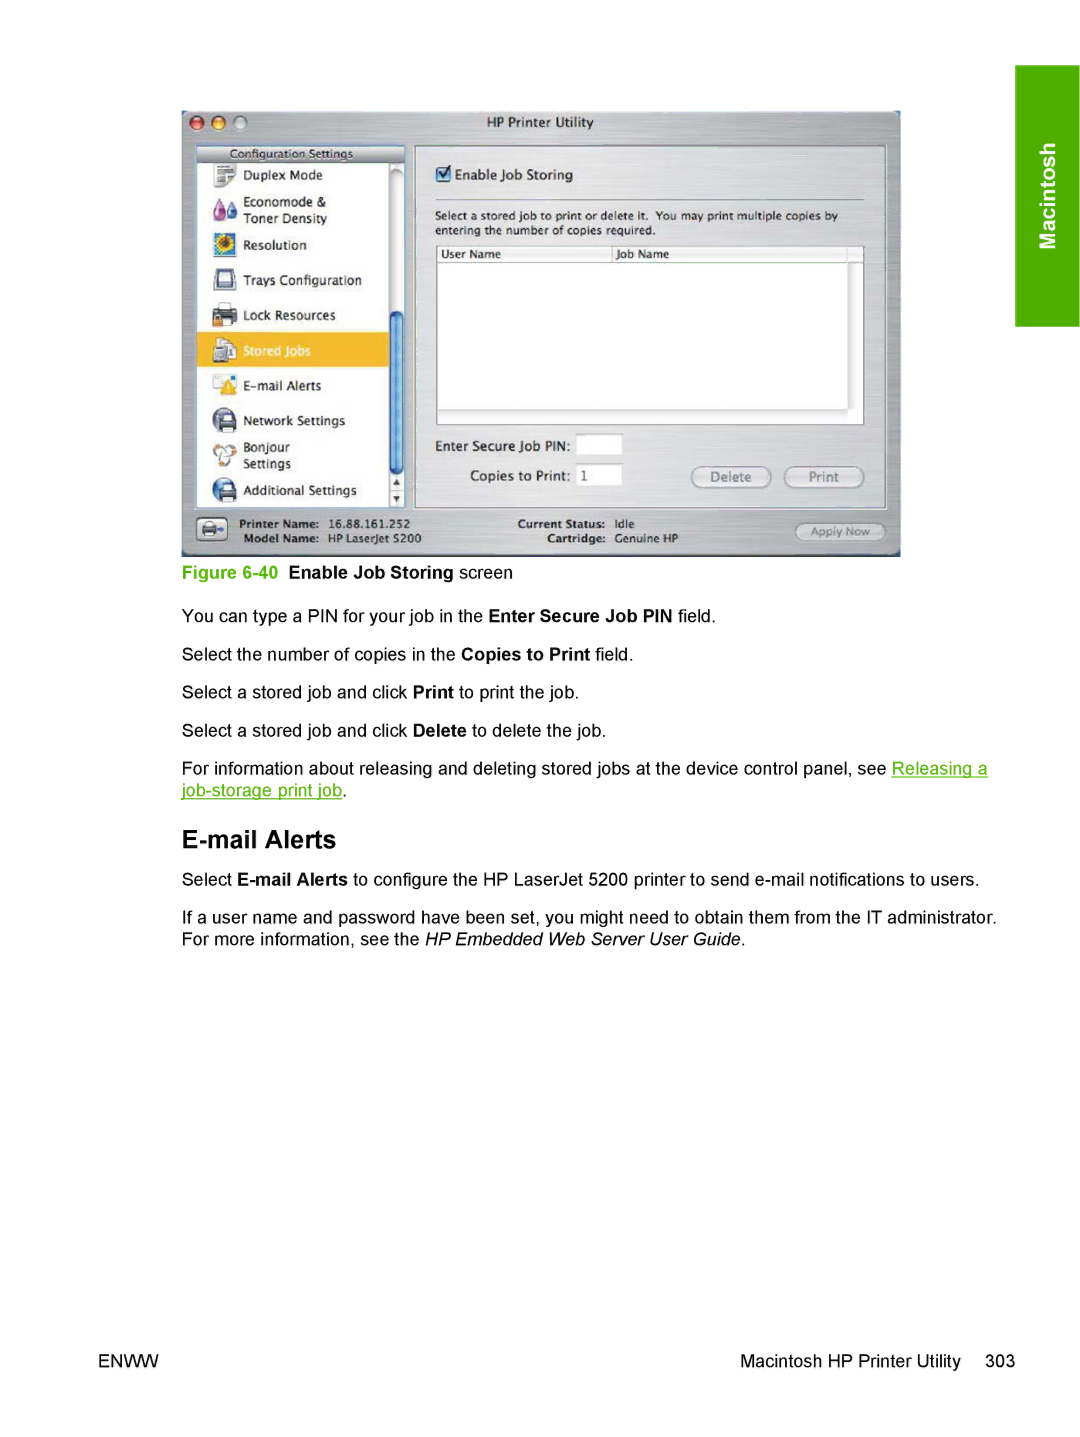 HP 5200L manual Mail Alerts, 40Enable Job Storing screen 